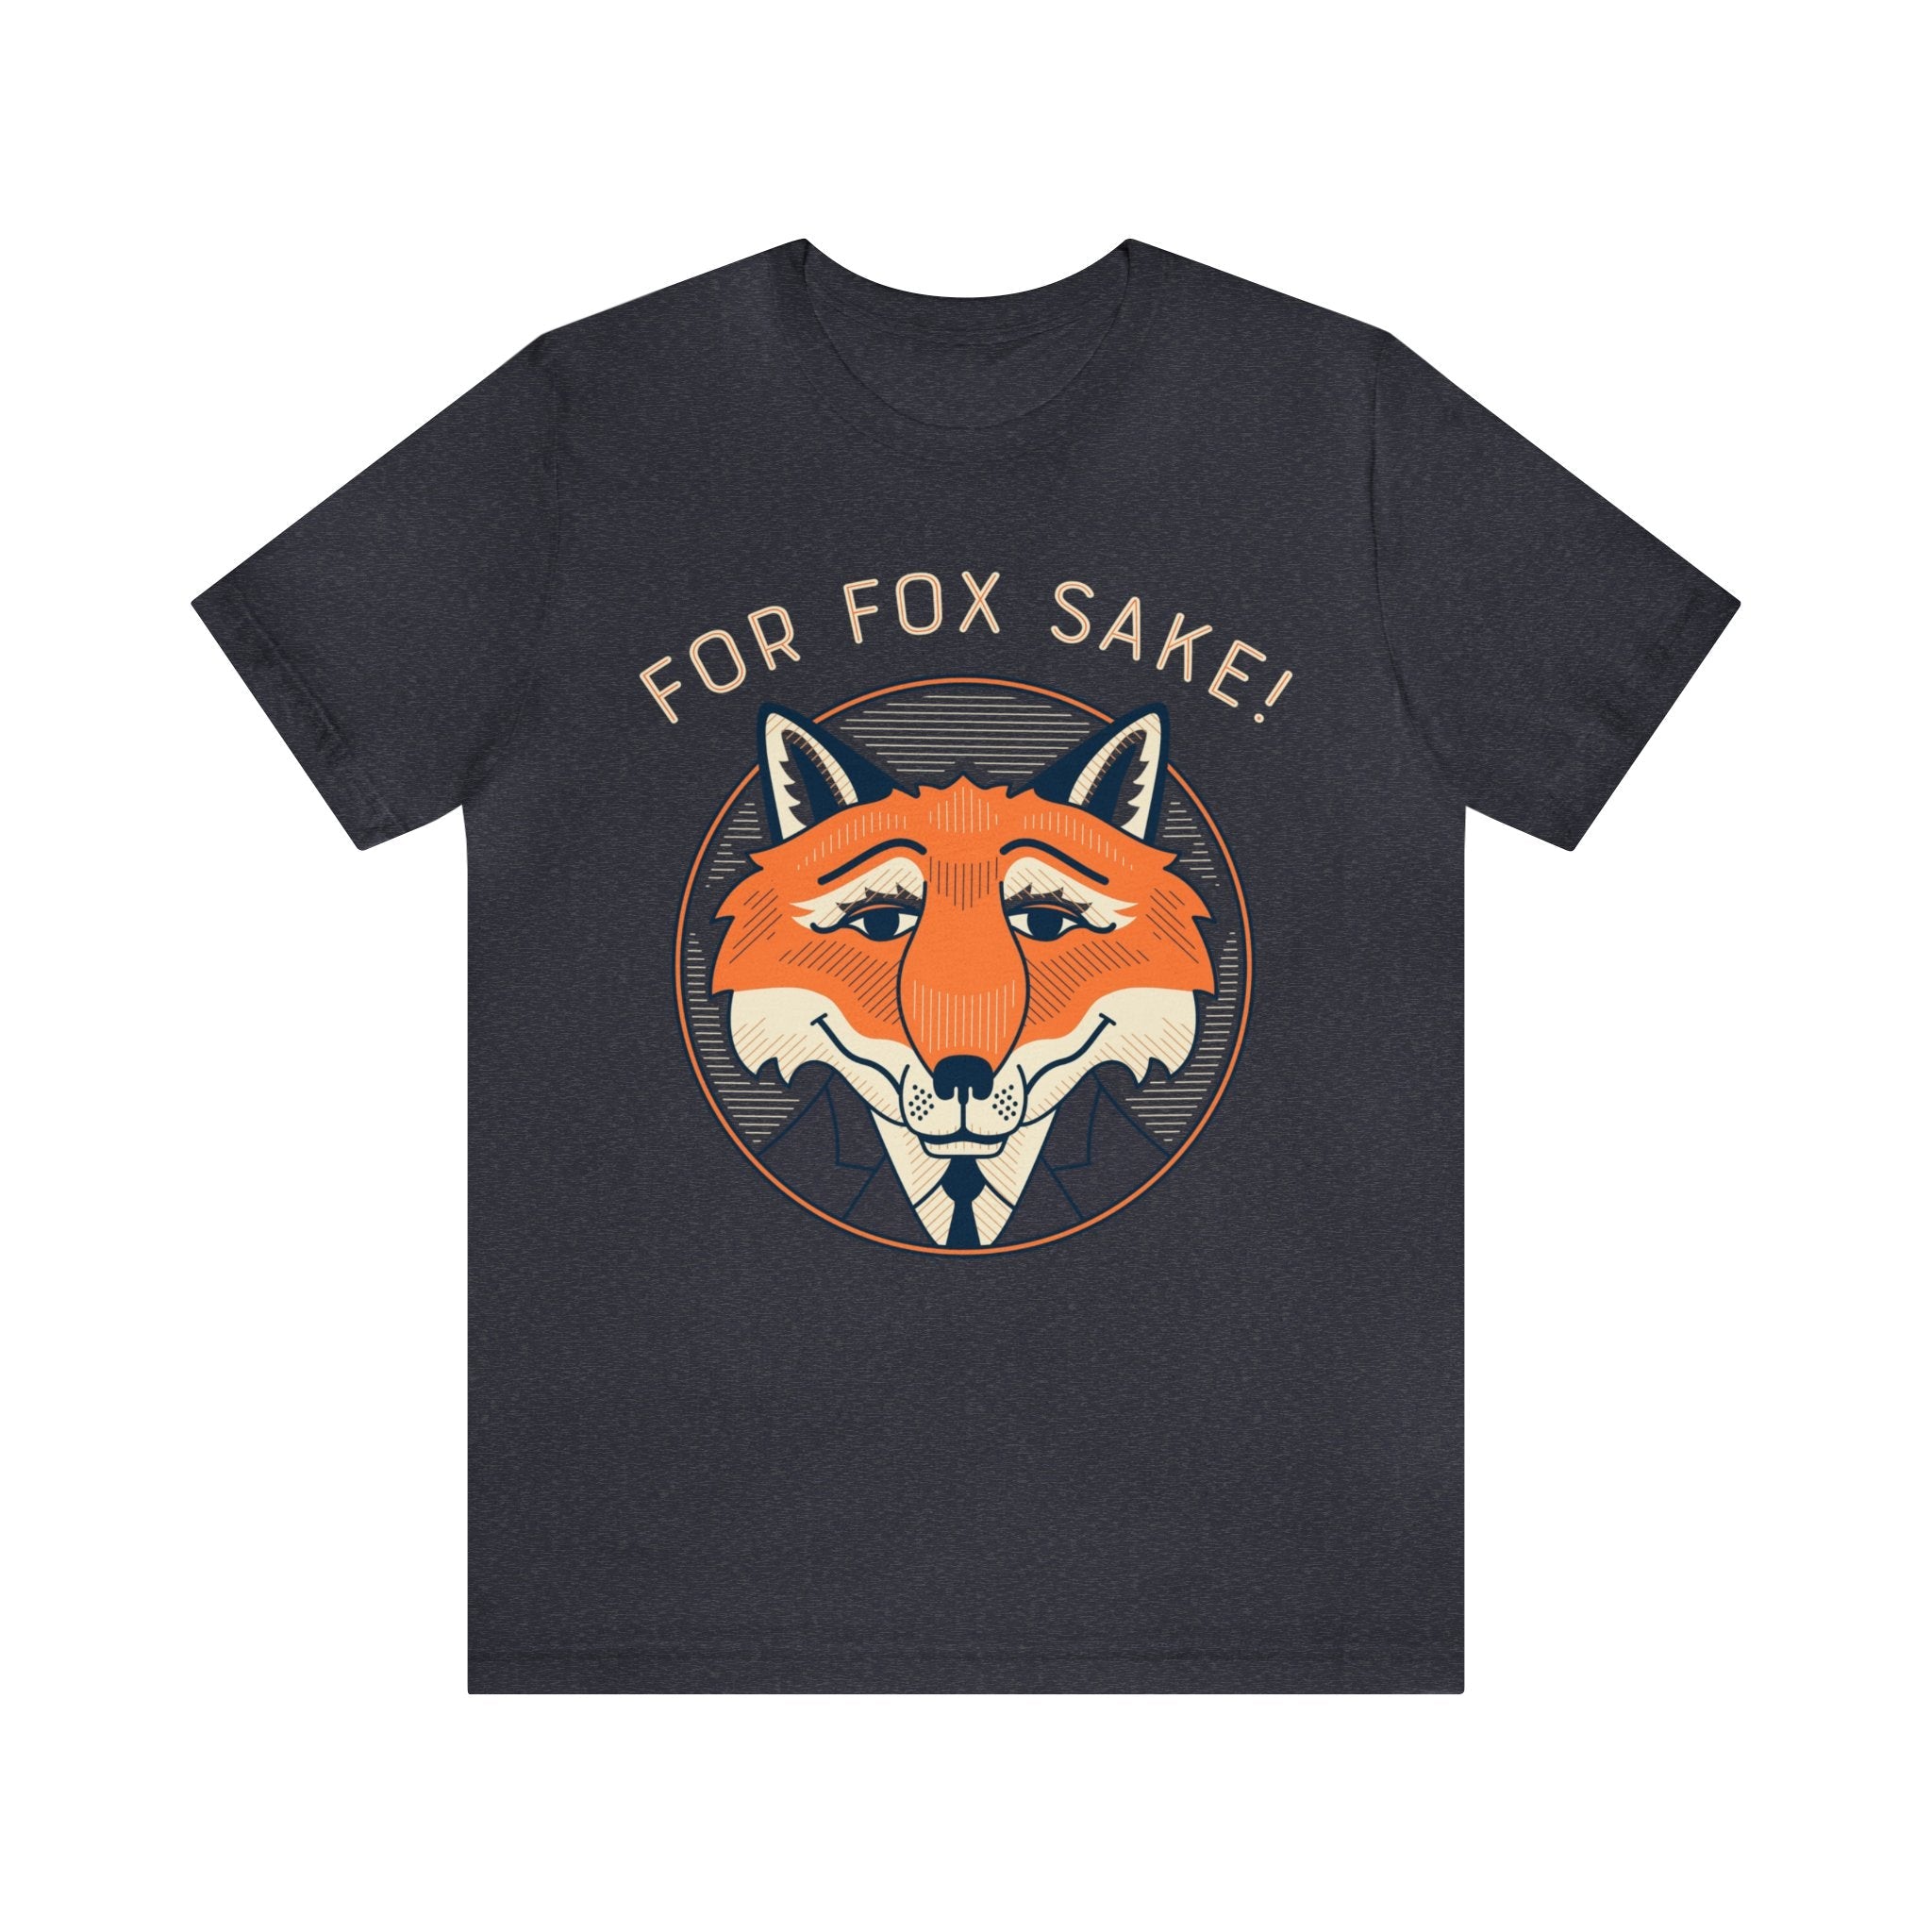 For Fox Sake! - Dirty Coast